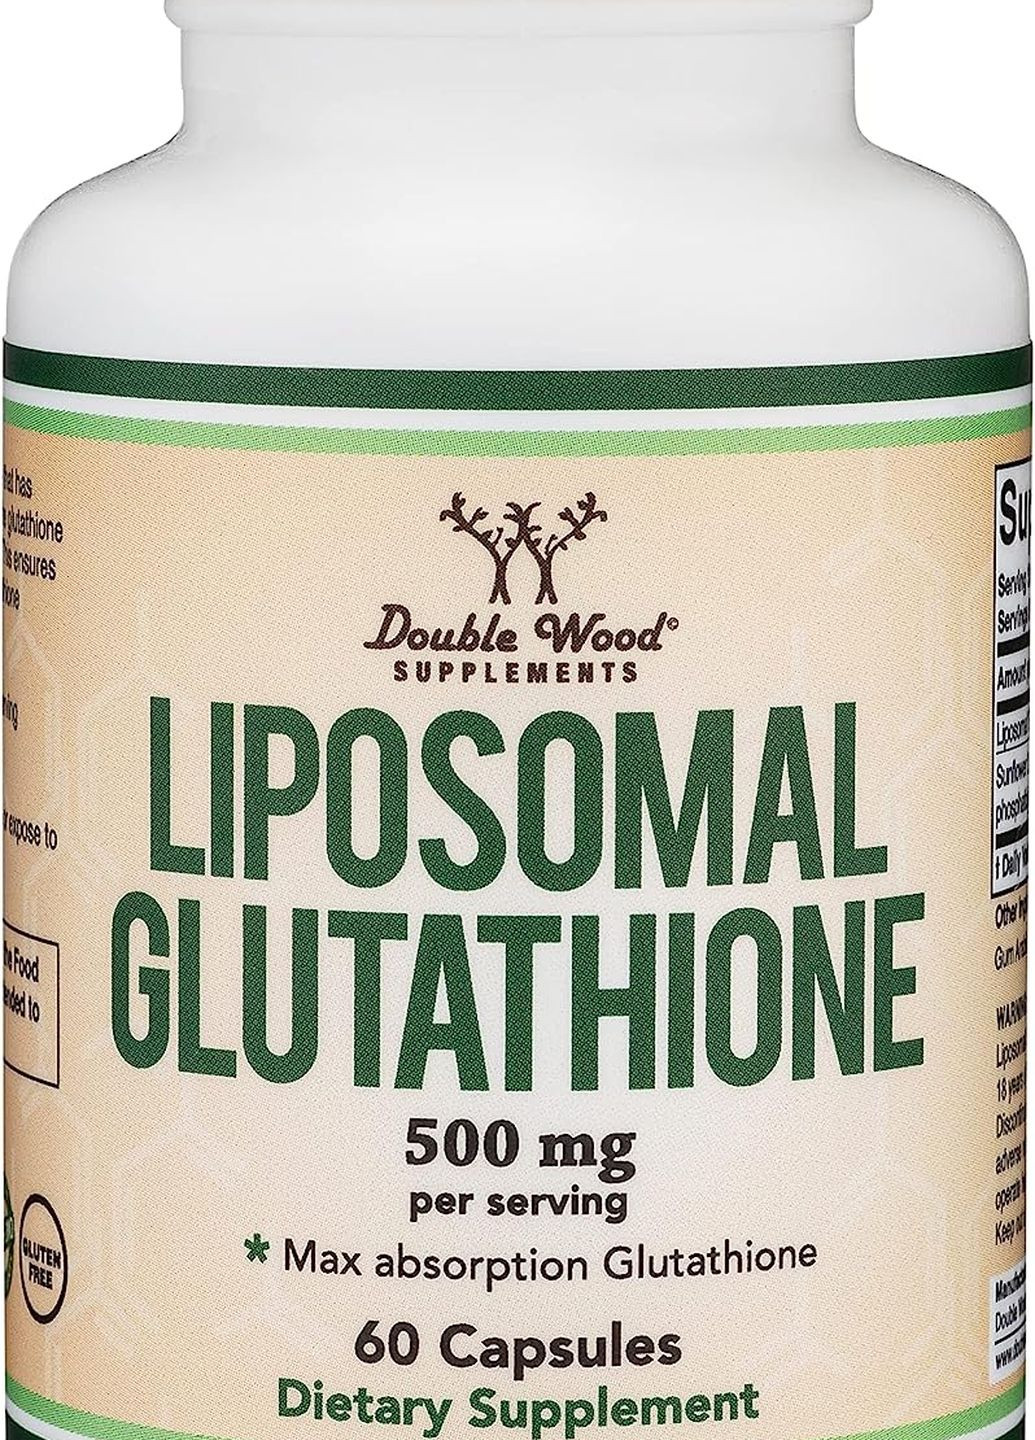 Ліпосомальний глутатіон Liposomal Glutathione 500 mg 60 capsules Double Wood Supplements (261765750)